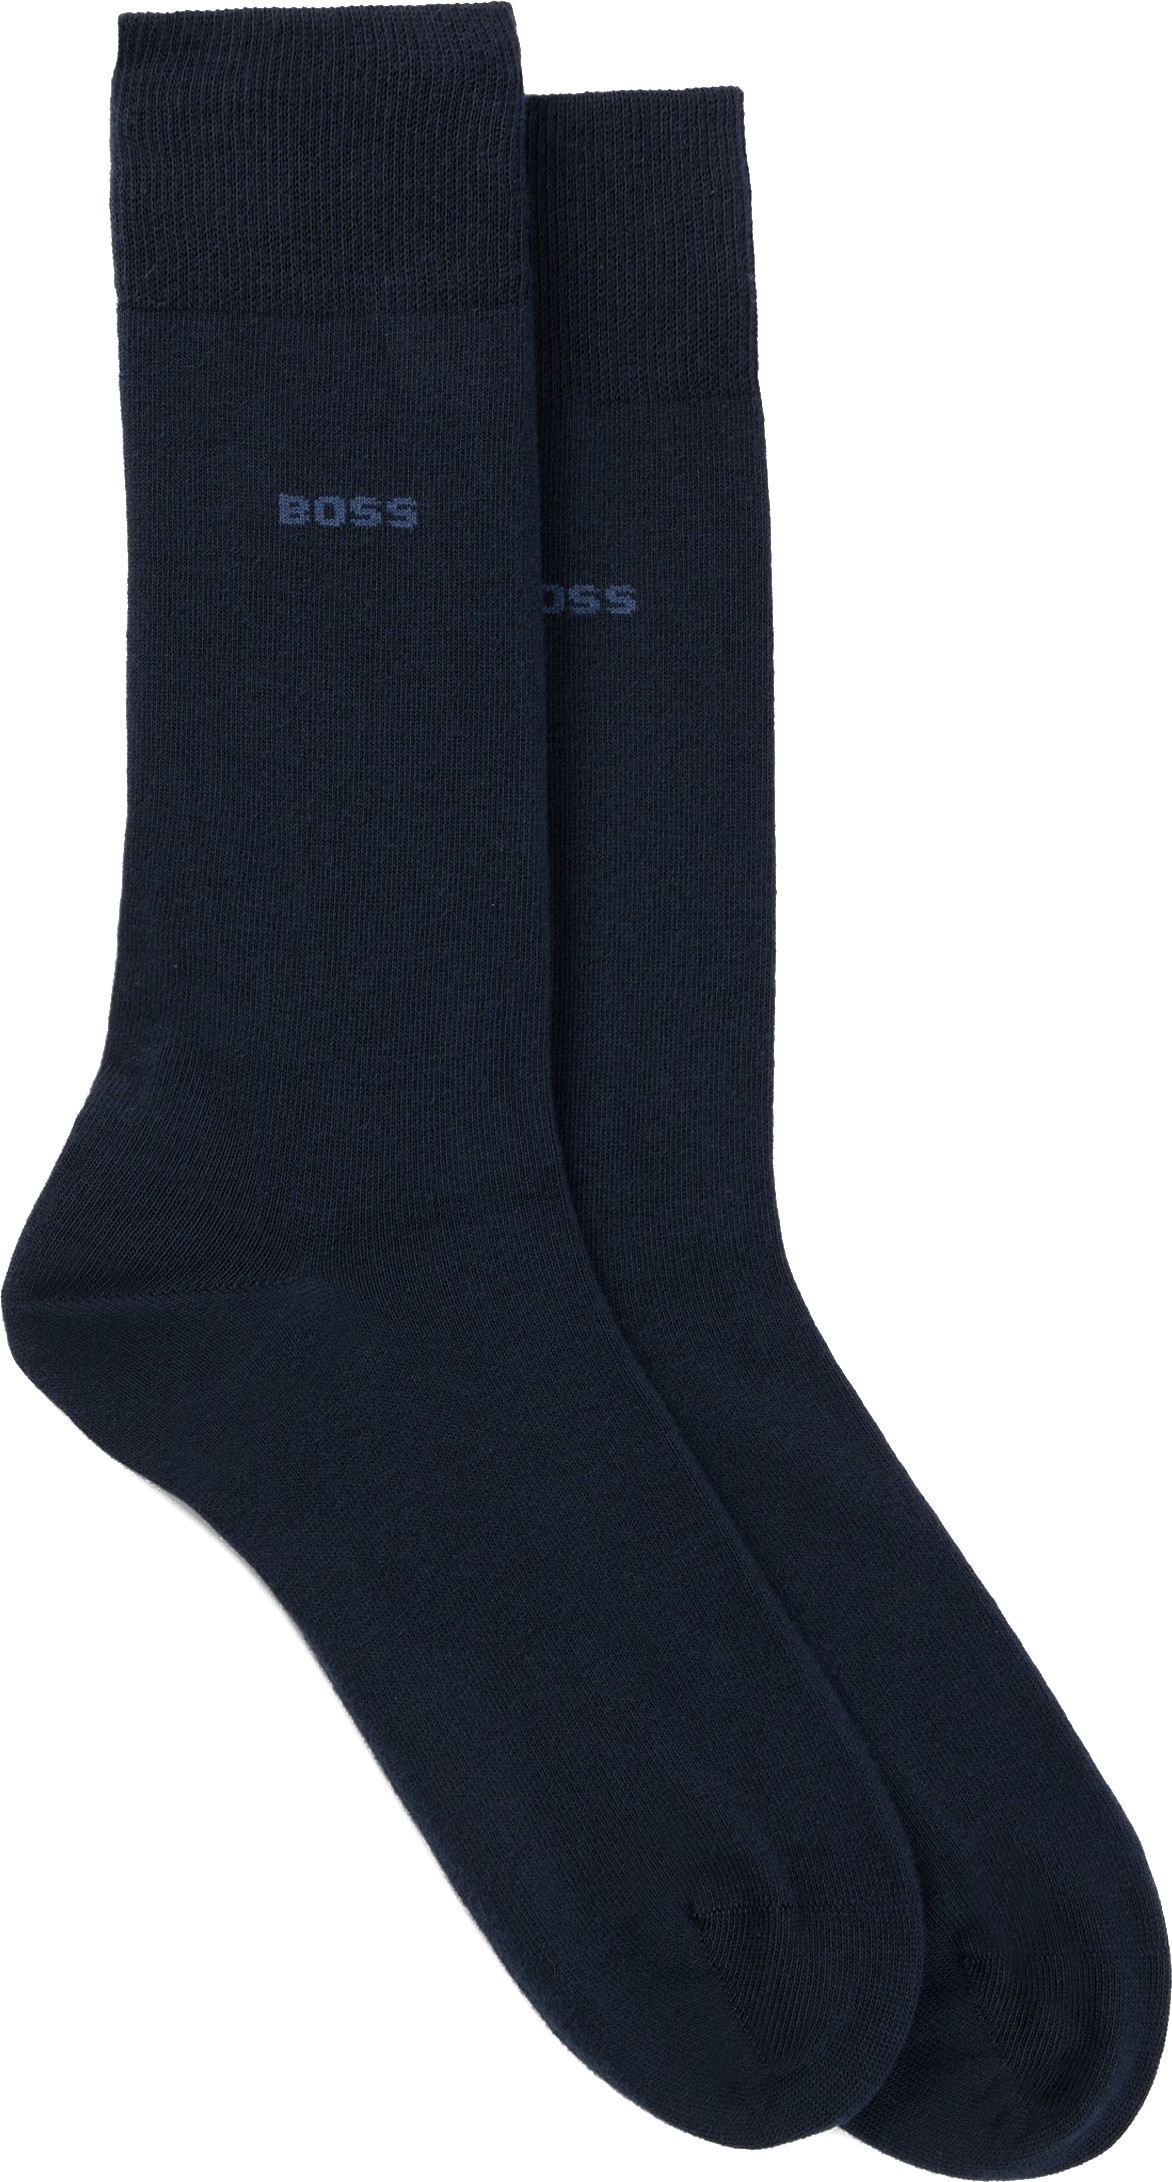 Hugo Boss 2 PACK - pánske ponožky BOSS 50516616-401 43-46